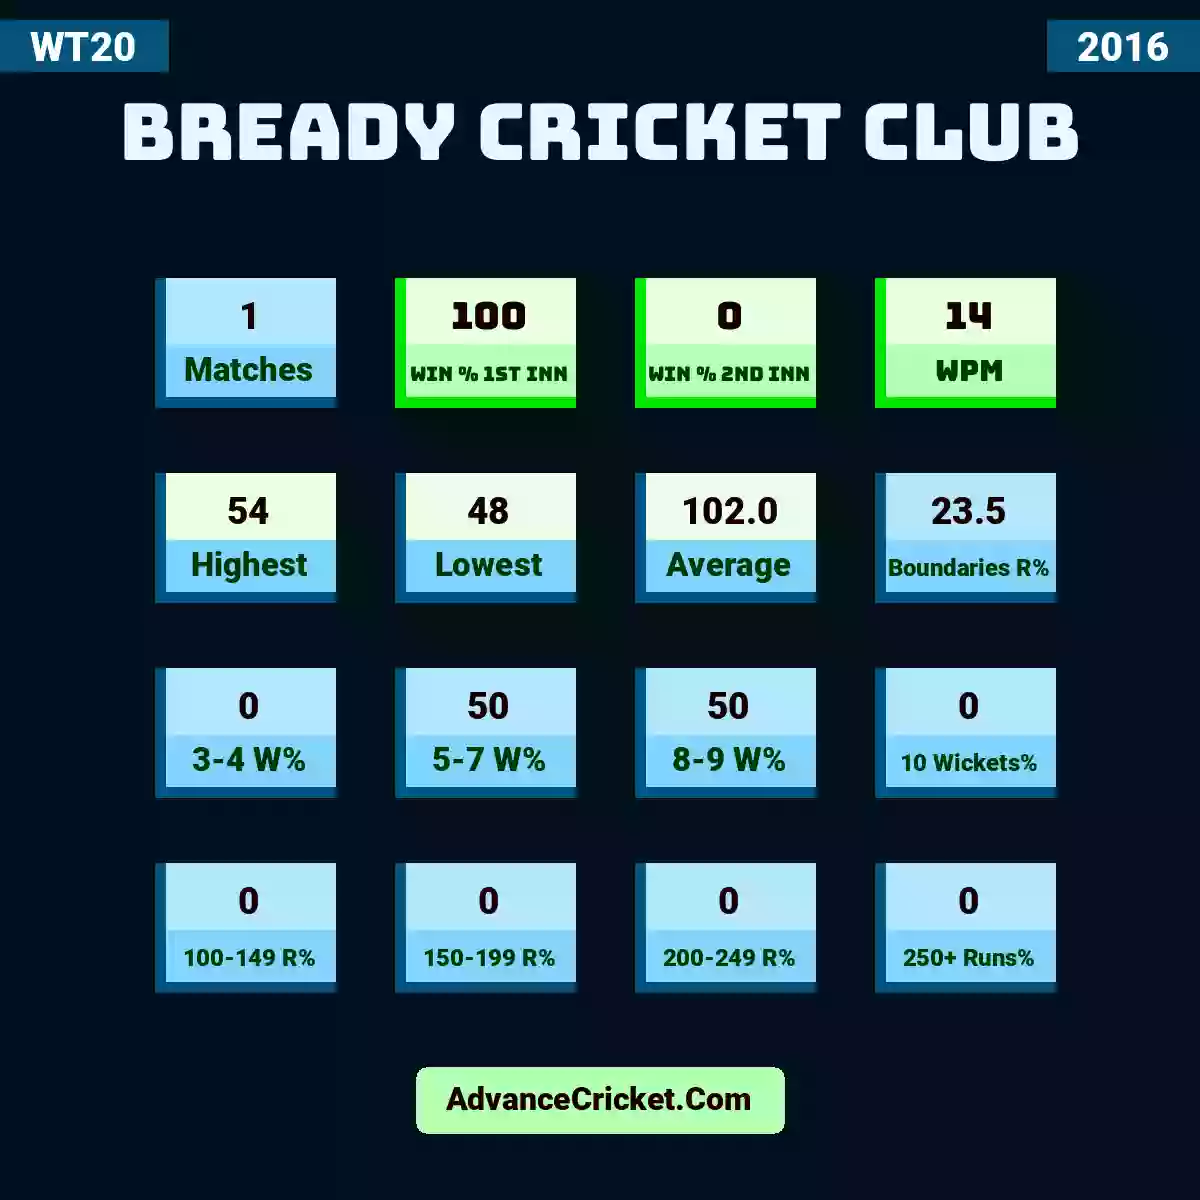 Image showing Bready Cricket Club with Matches: 1, Win % 1st Inn: 100, Win % 2nd Inn: 0, WPM: 14, Highest: 54, Lowest: 48, Average: 102.0, Boundaries R%: 23.5, 3-4 W%: 0, 5-7 W%: 50, 8-9 W%: 50, 10 Wickets%: 0, 100-149 R%: 0, 150-199 R%: 0, 200-249 R%: 0, 250+ Runs%: 0.